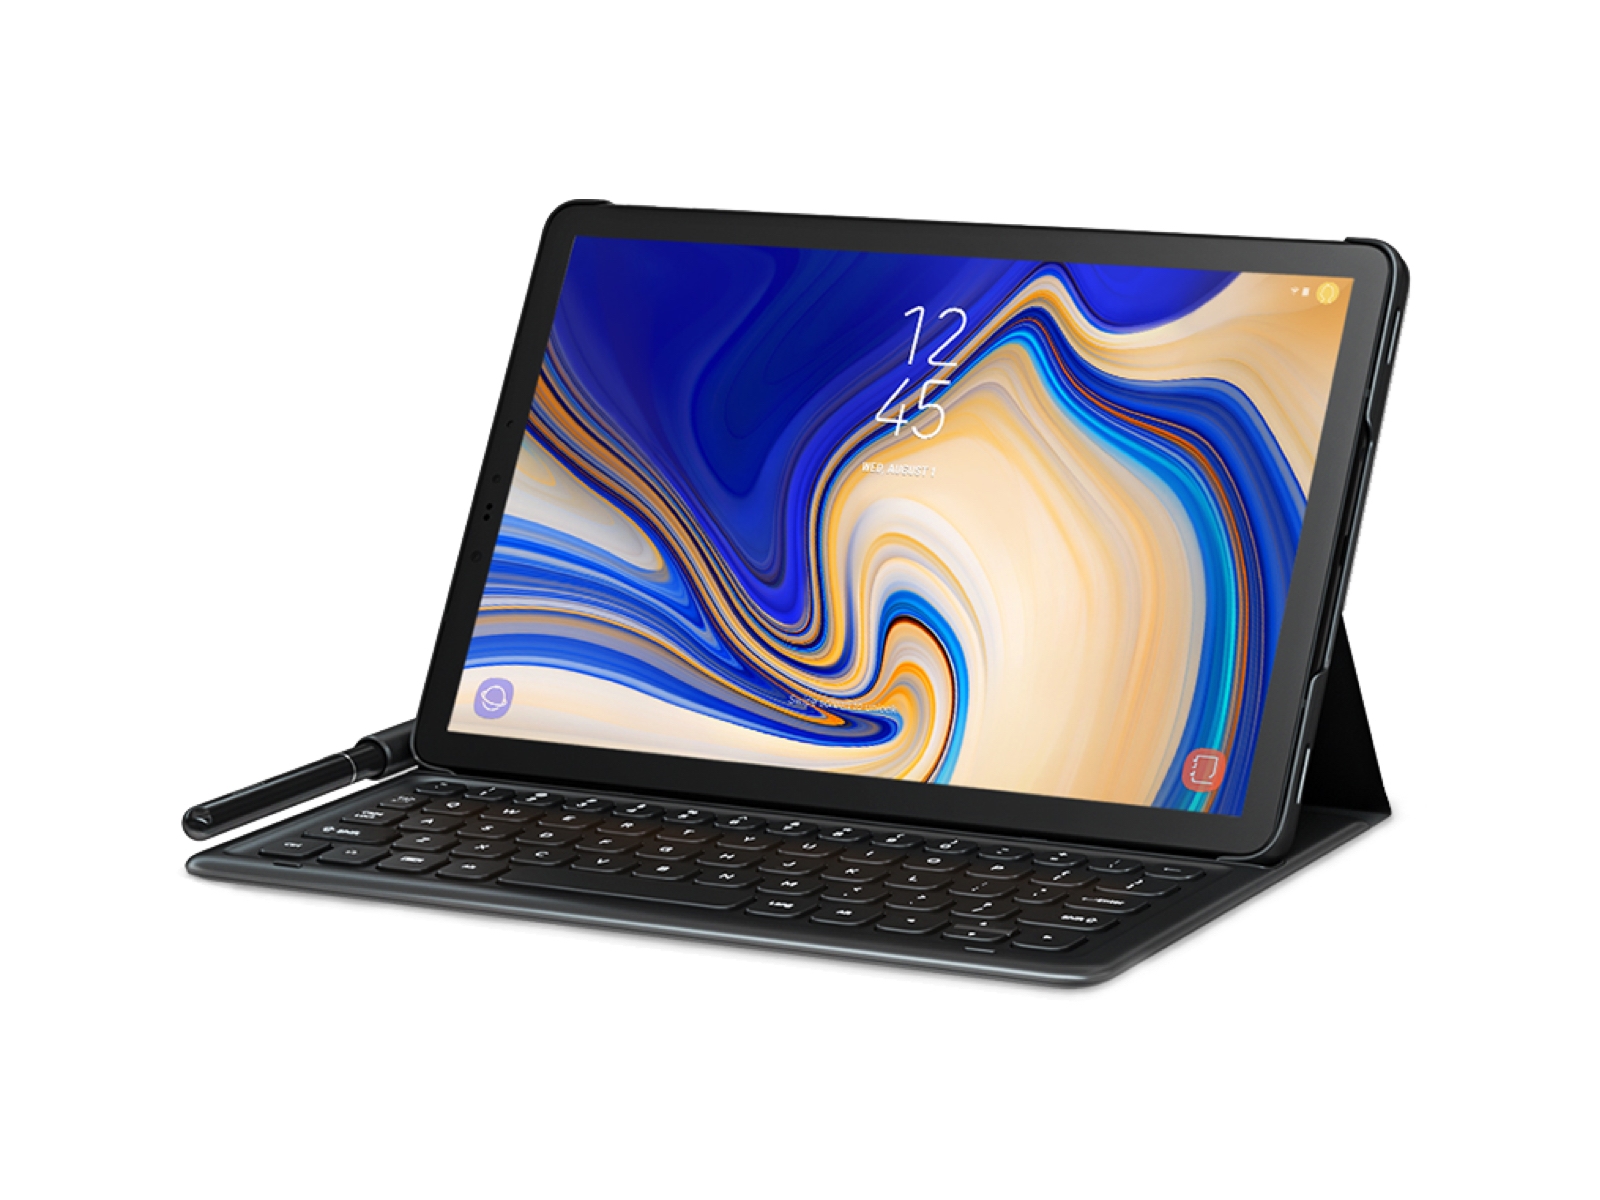 Meander Stapel vloot Galaxy Tab S4 Book Cover Keyboard Mobile Accessories - EJ-FT830UBEGUJ |  Samsung US